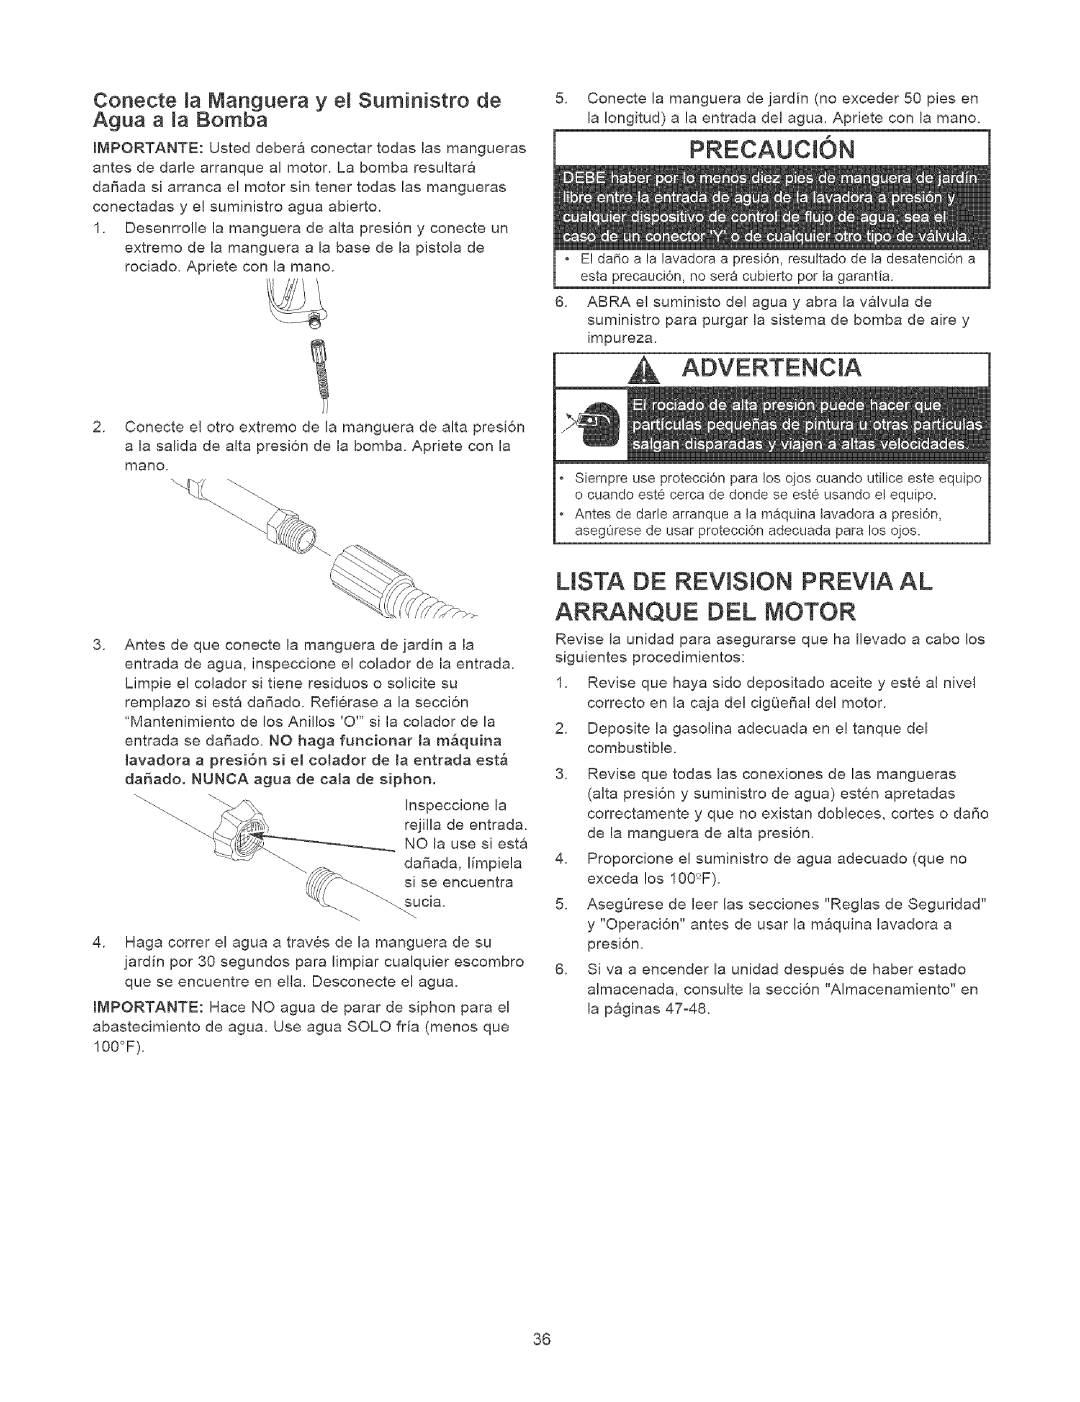 Craftsman 580.7524 owner manual Precaucion, USTA DE REViSiON PREVJA AL ARRANQUE DEL MOTOR 